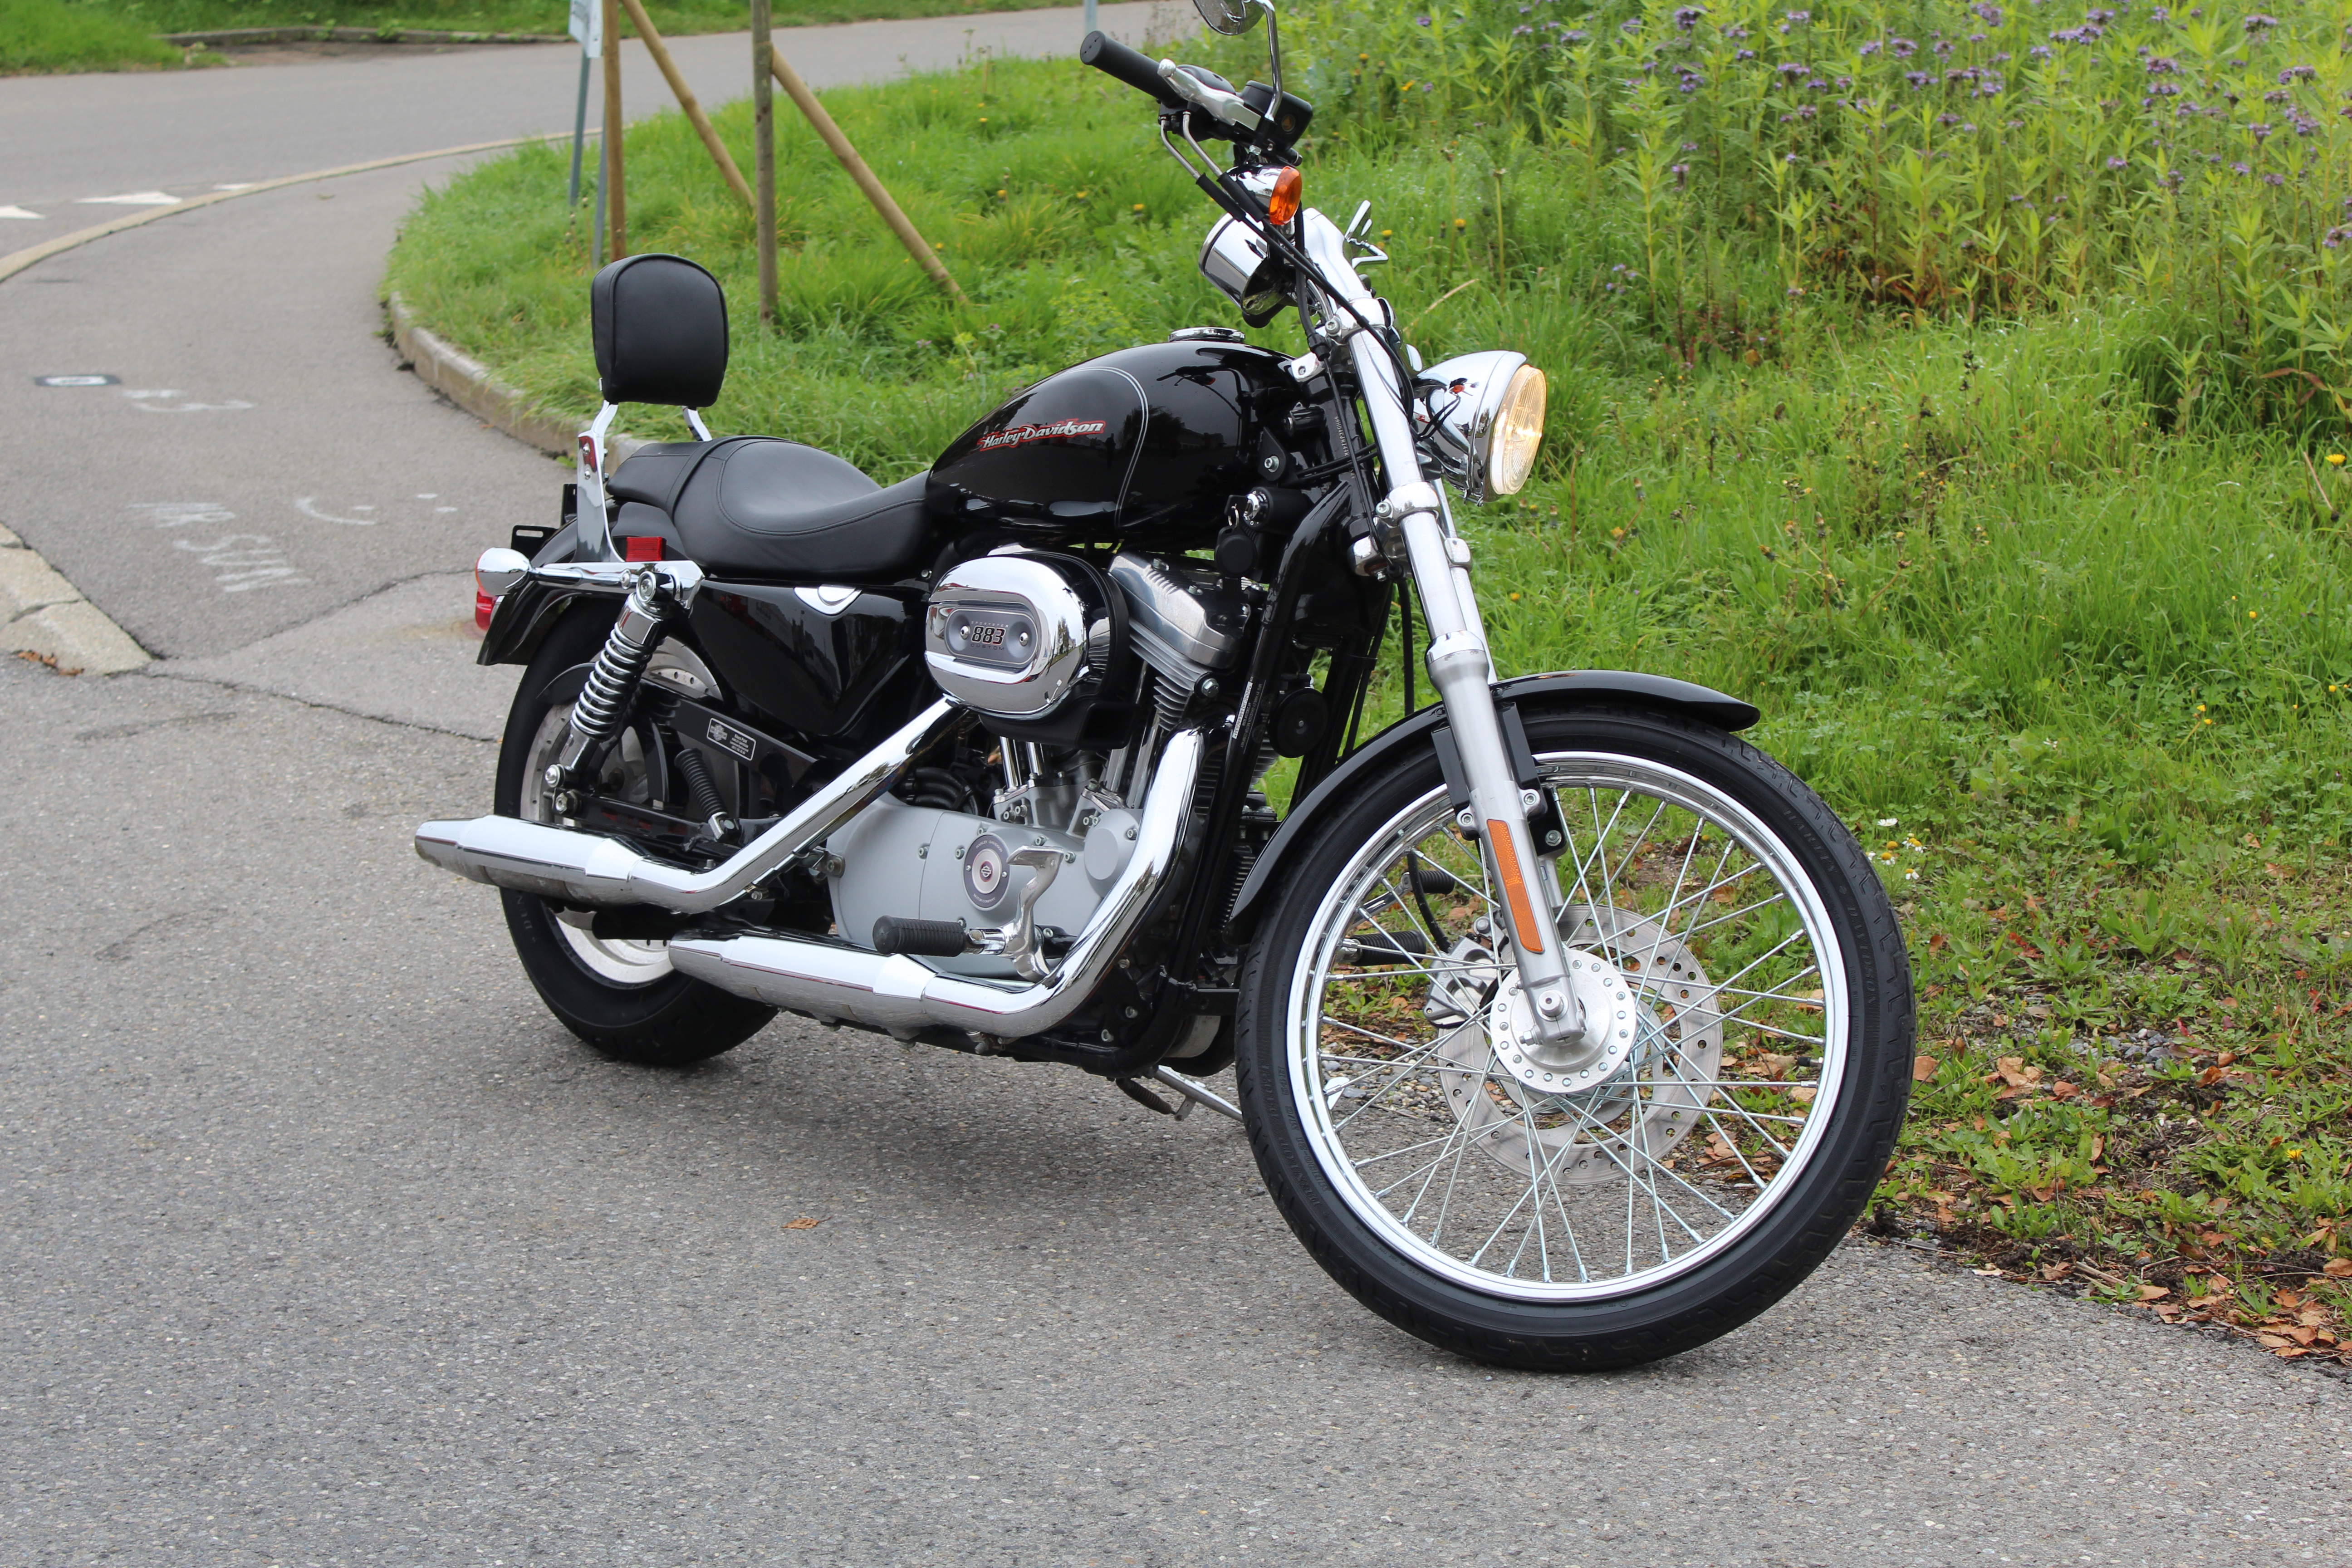 Harley Davidson XI883c